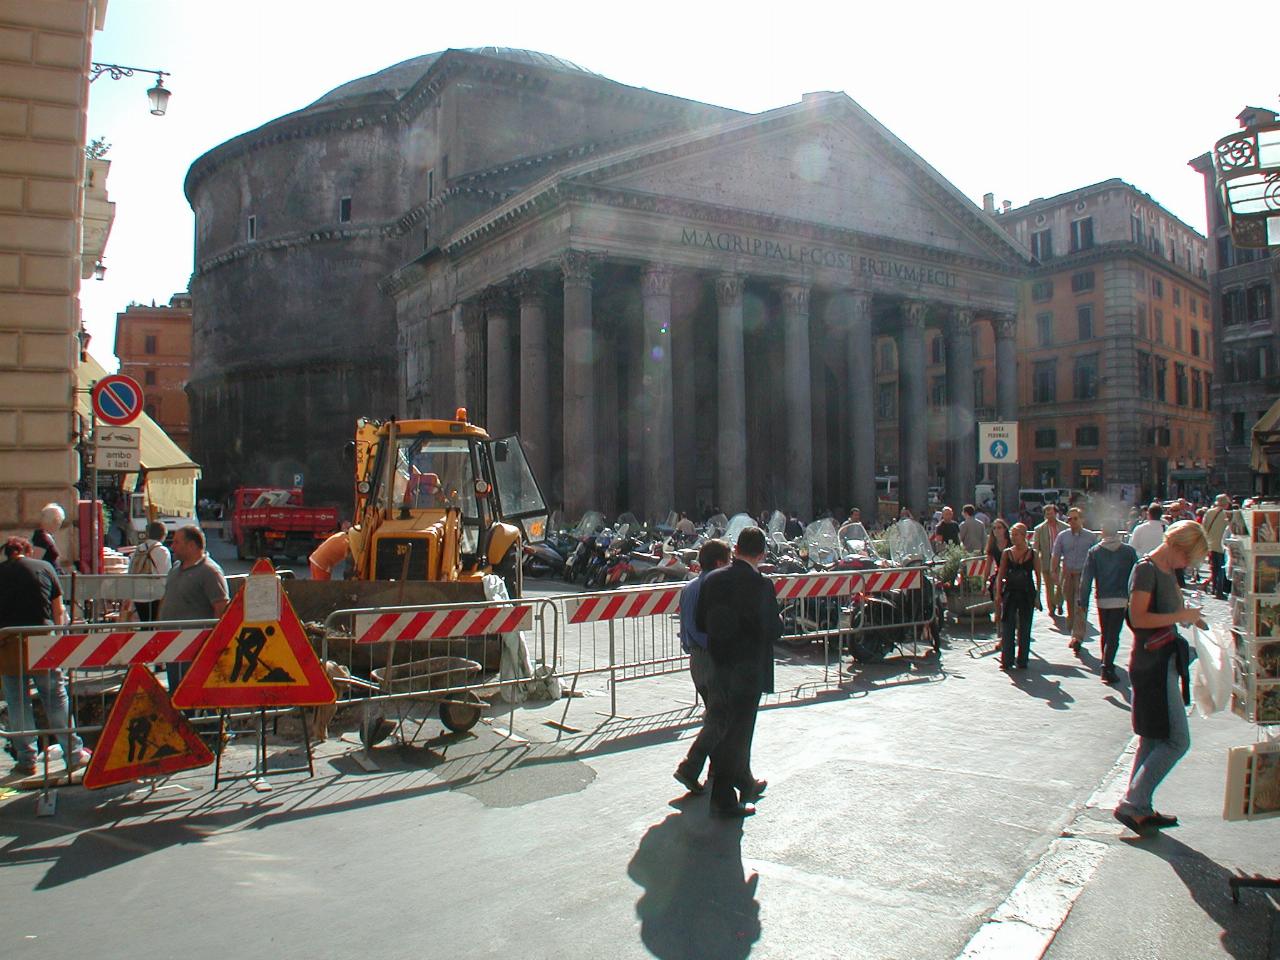 Piazza Rotunda and Pantheon